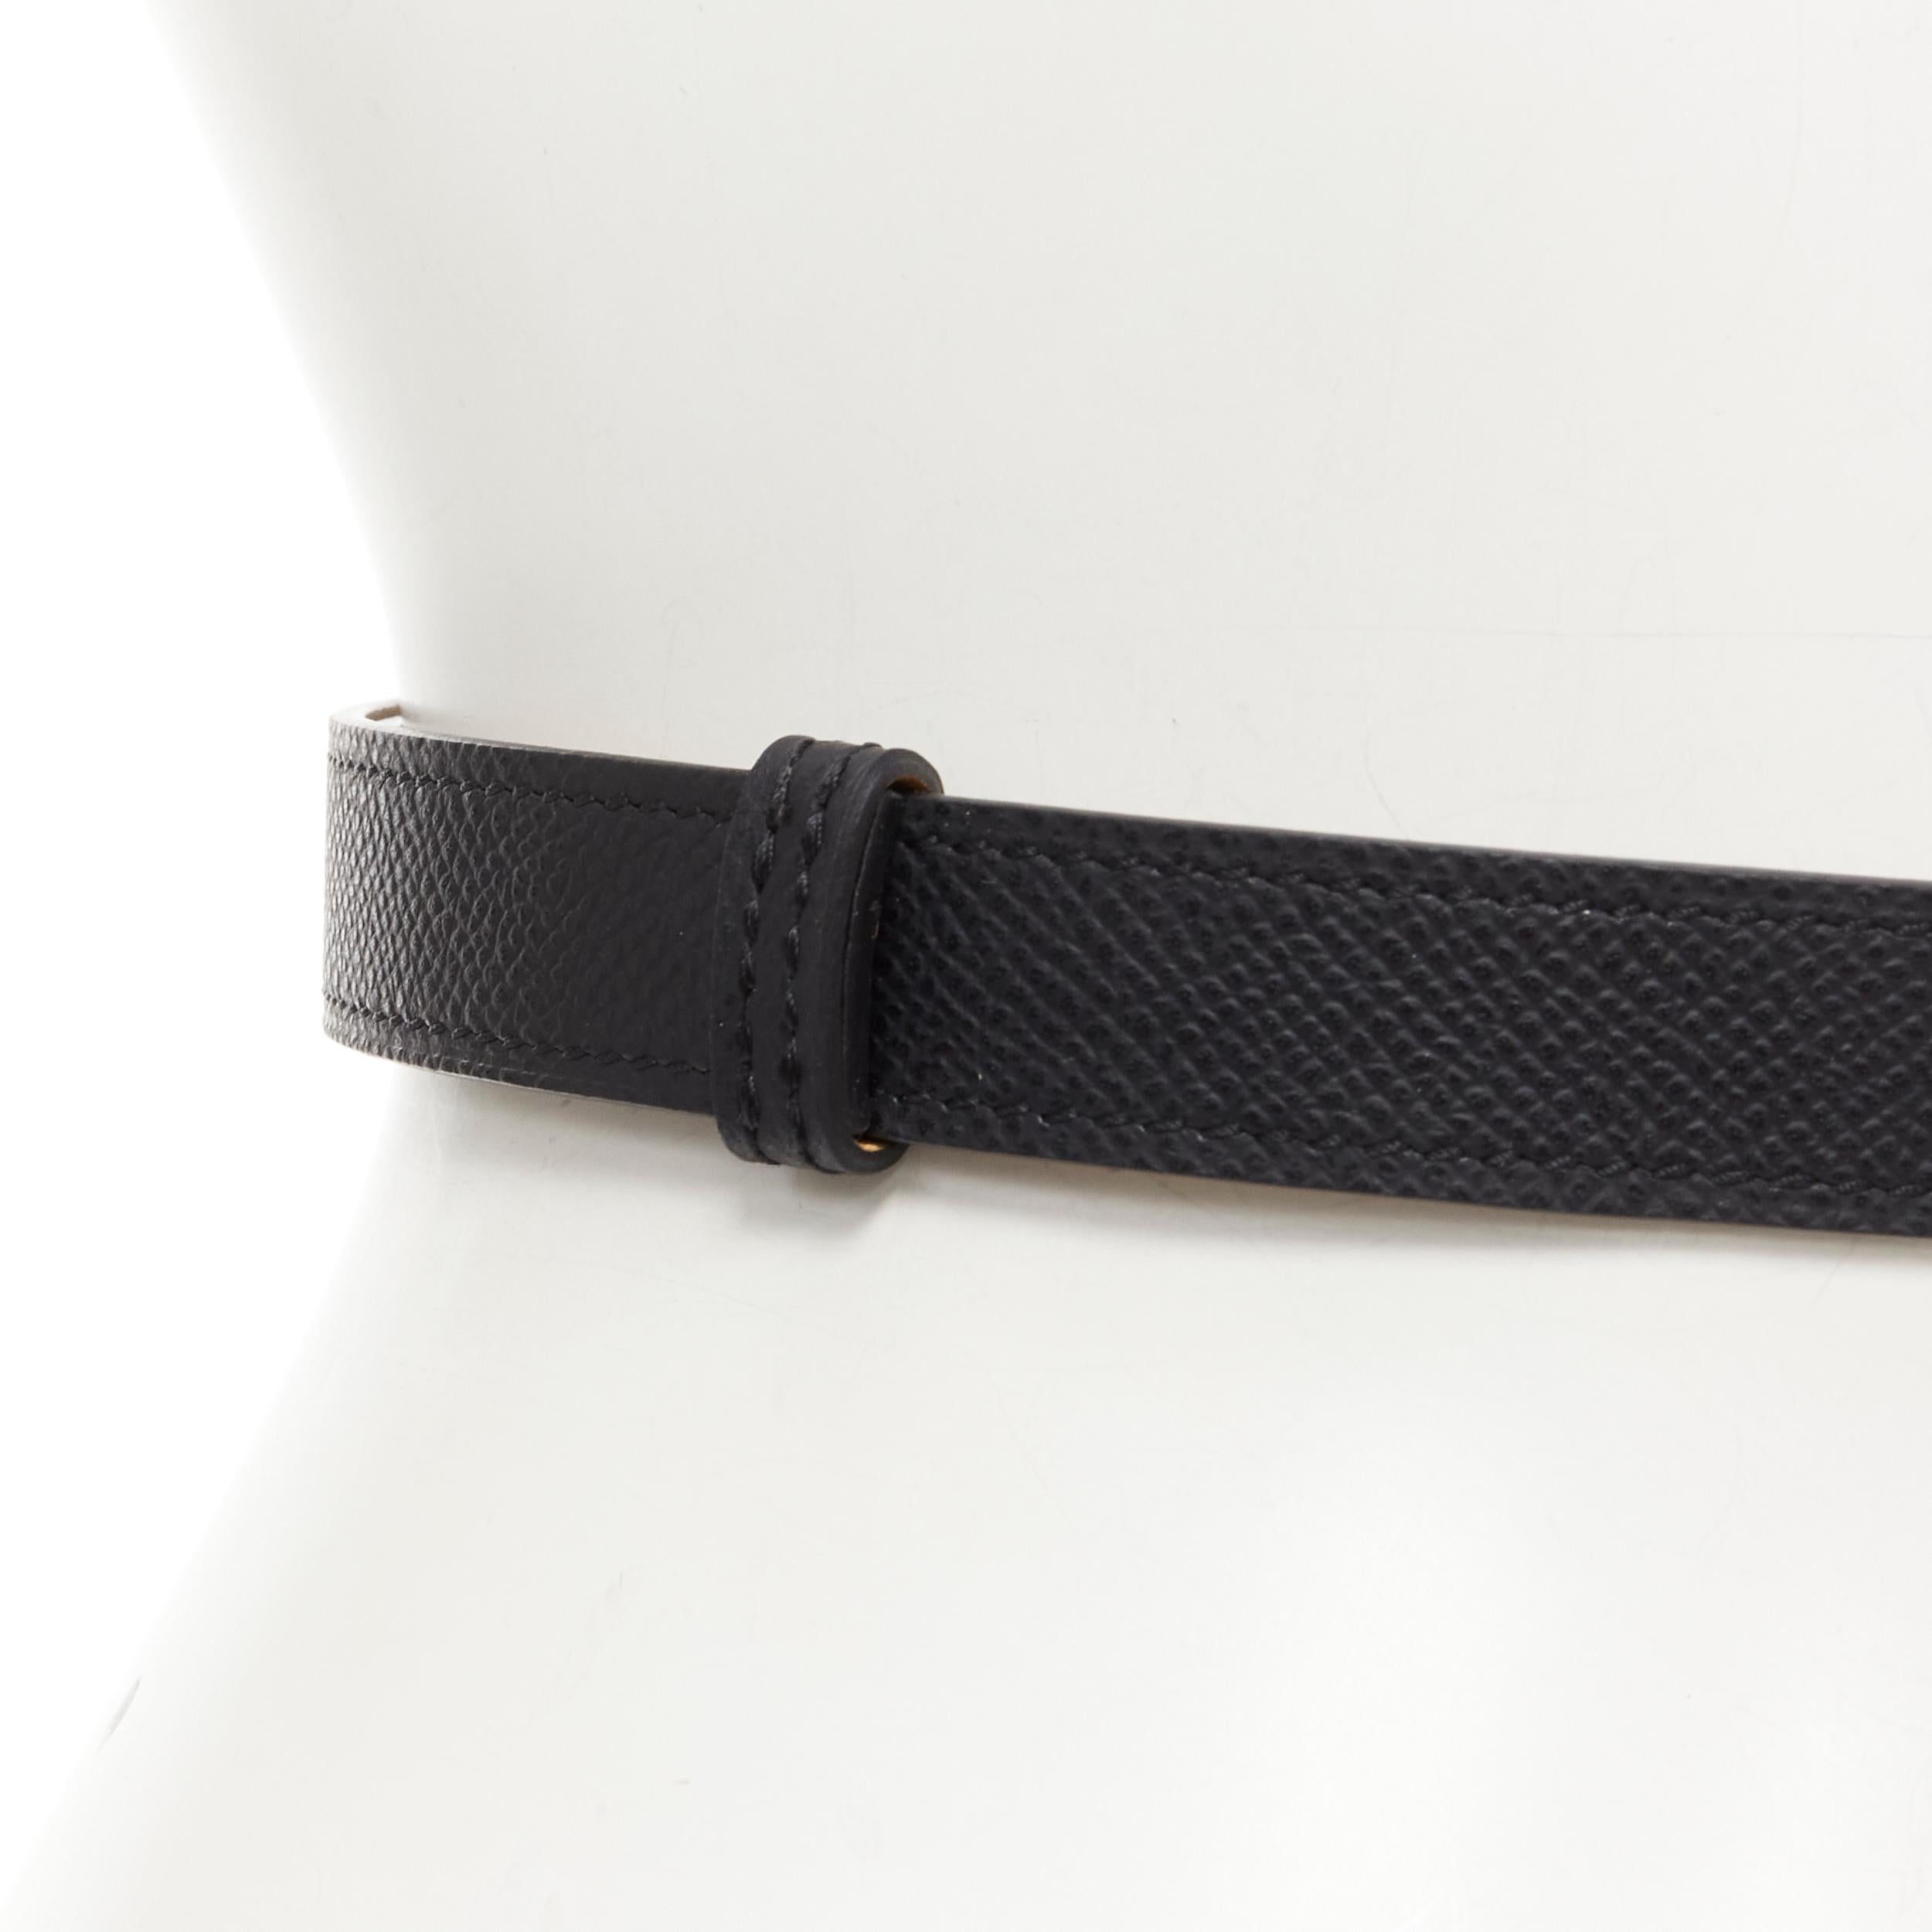 Women's HERMES Kelly black leather gold tone GHW turnlock skinny waist belt adjustable